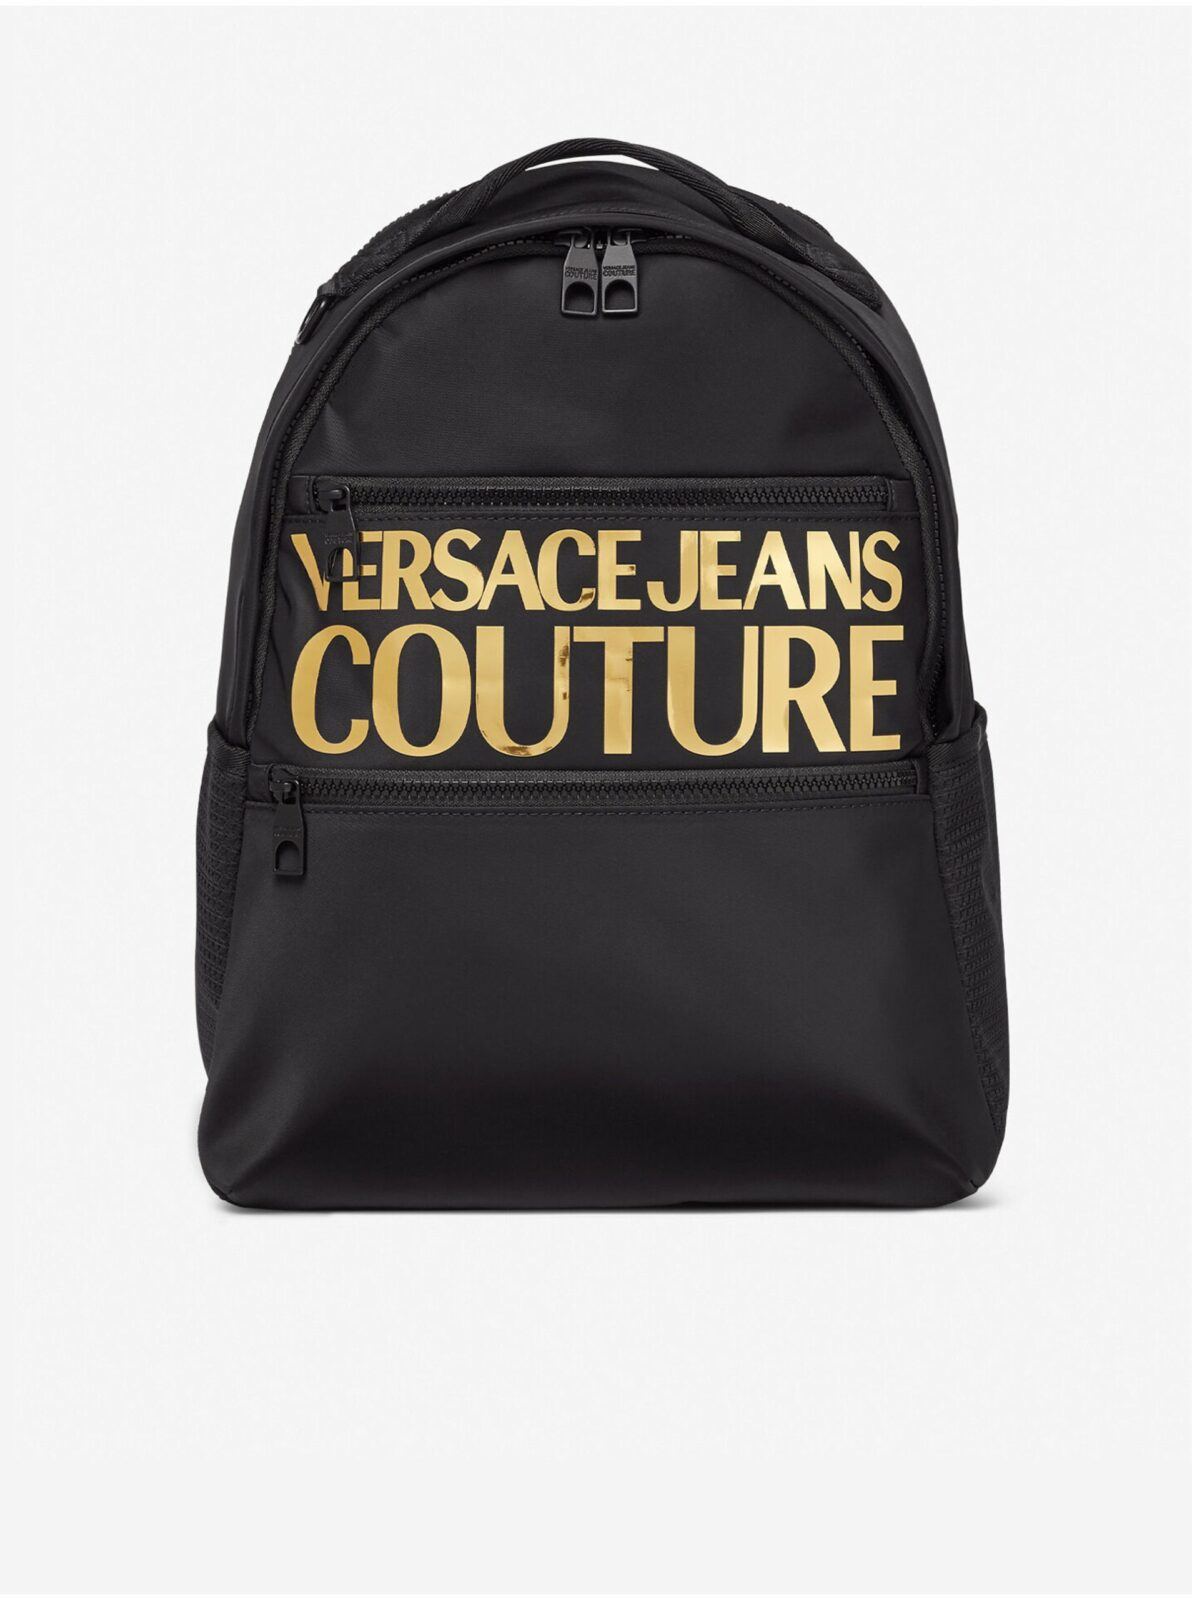 Černý pánský batoh s nápisem Versace